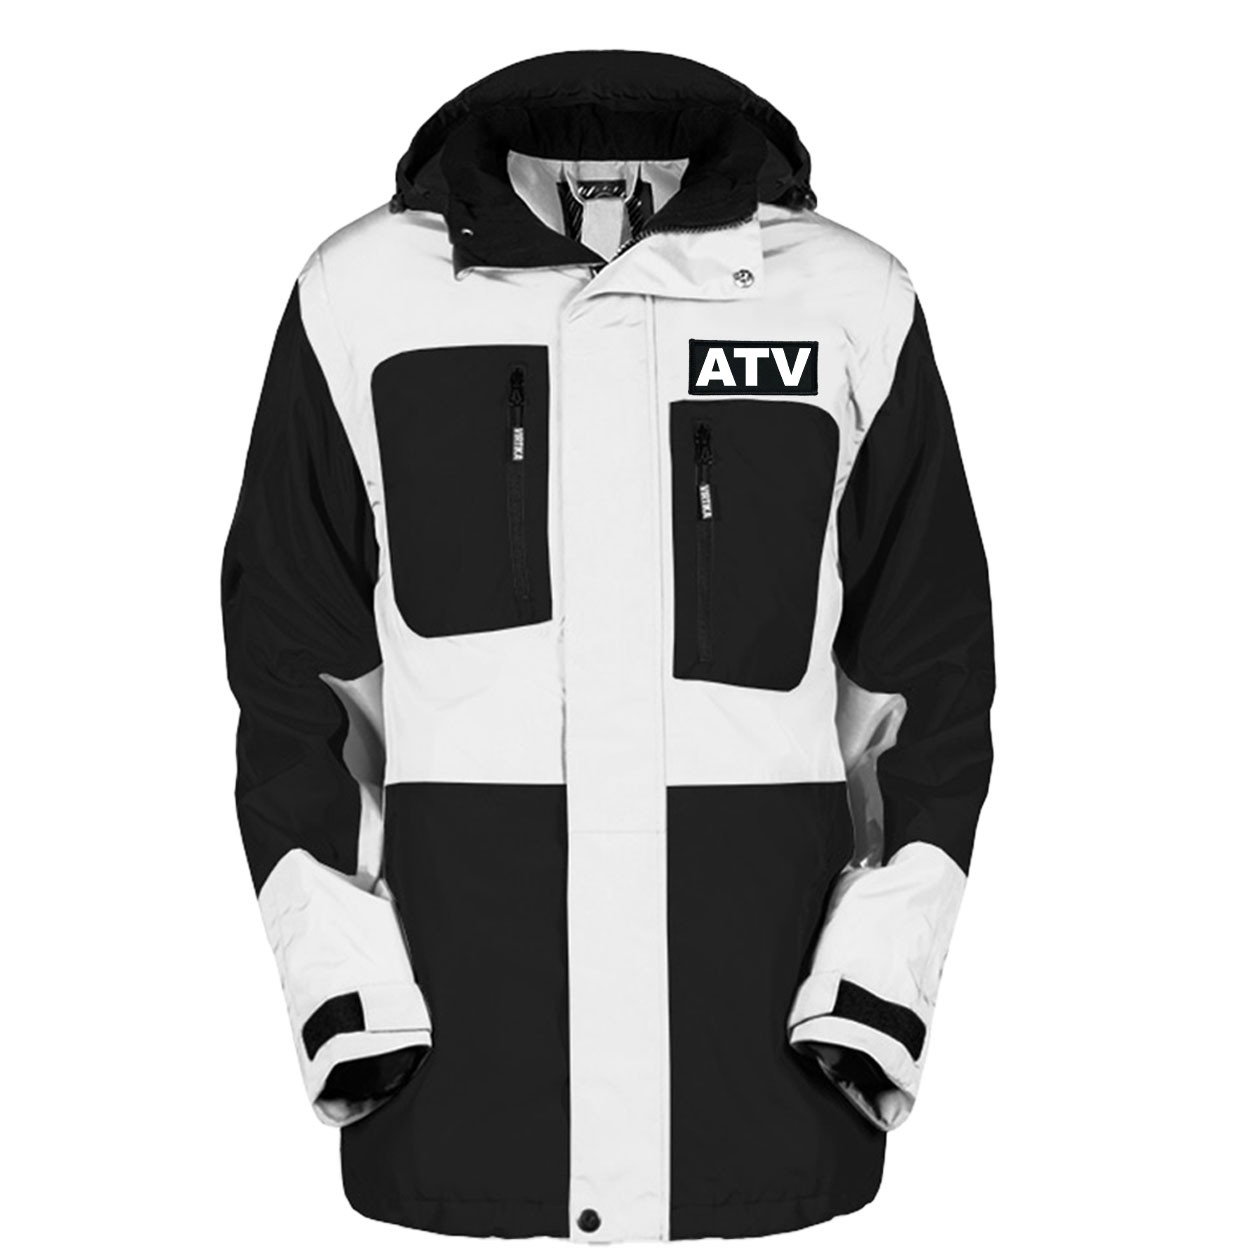 ATV Brand Logo Classic Woven Patch Pro Snowboard Jacket (Black/White)